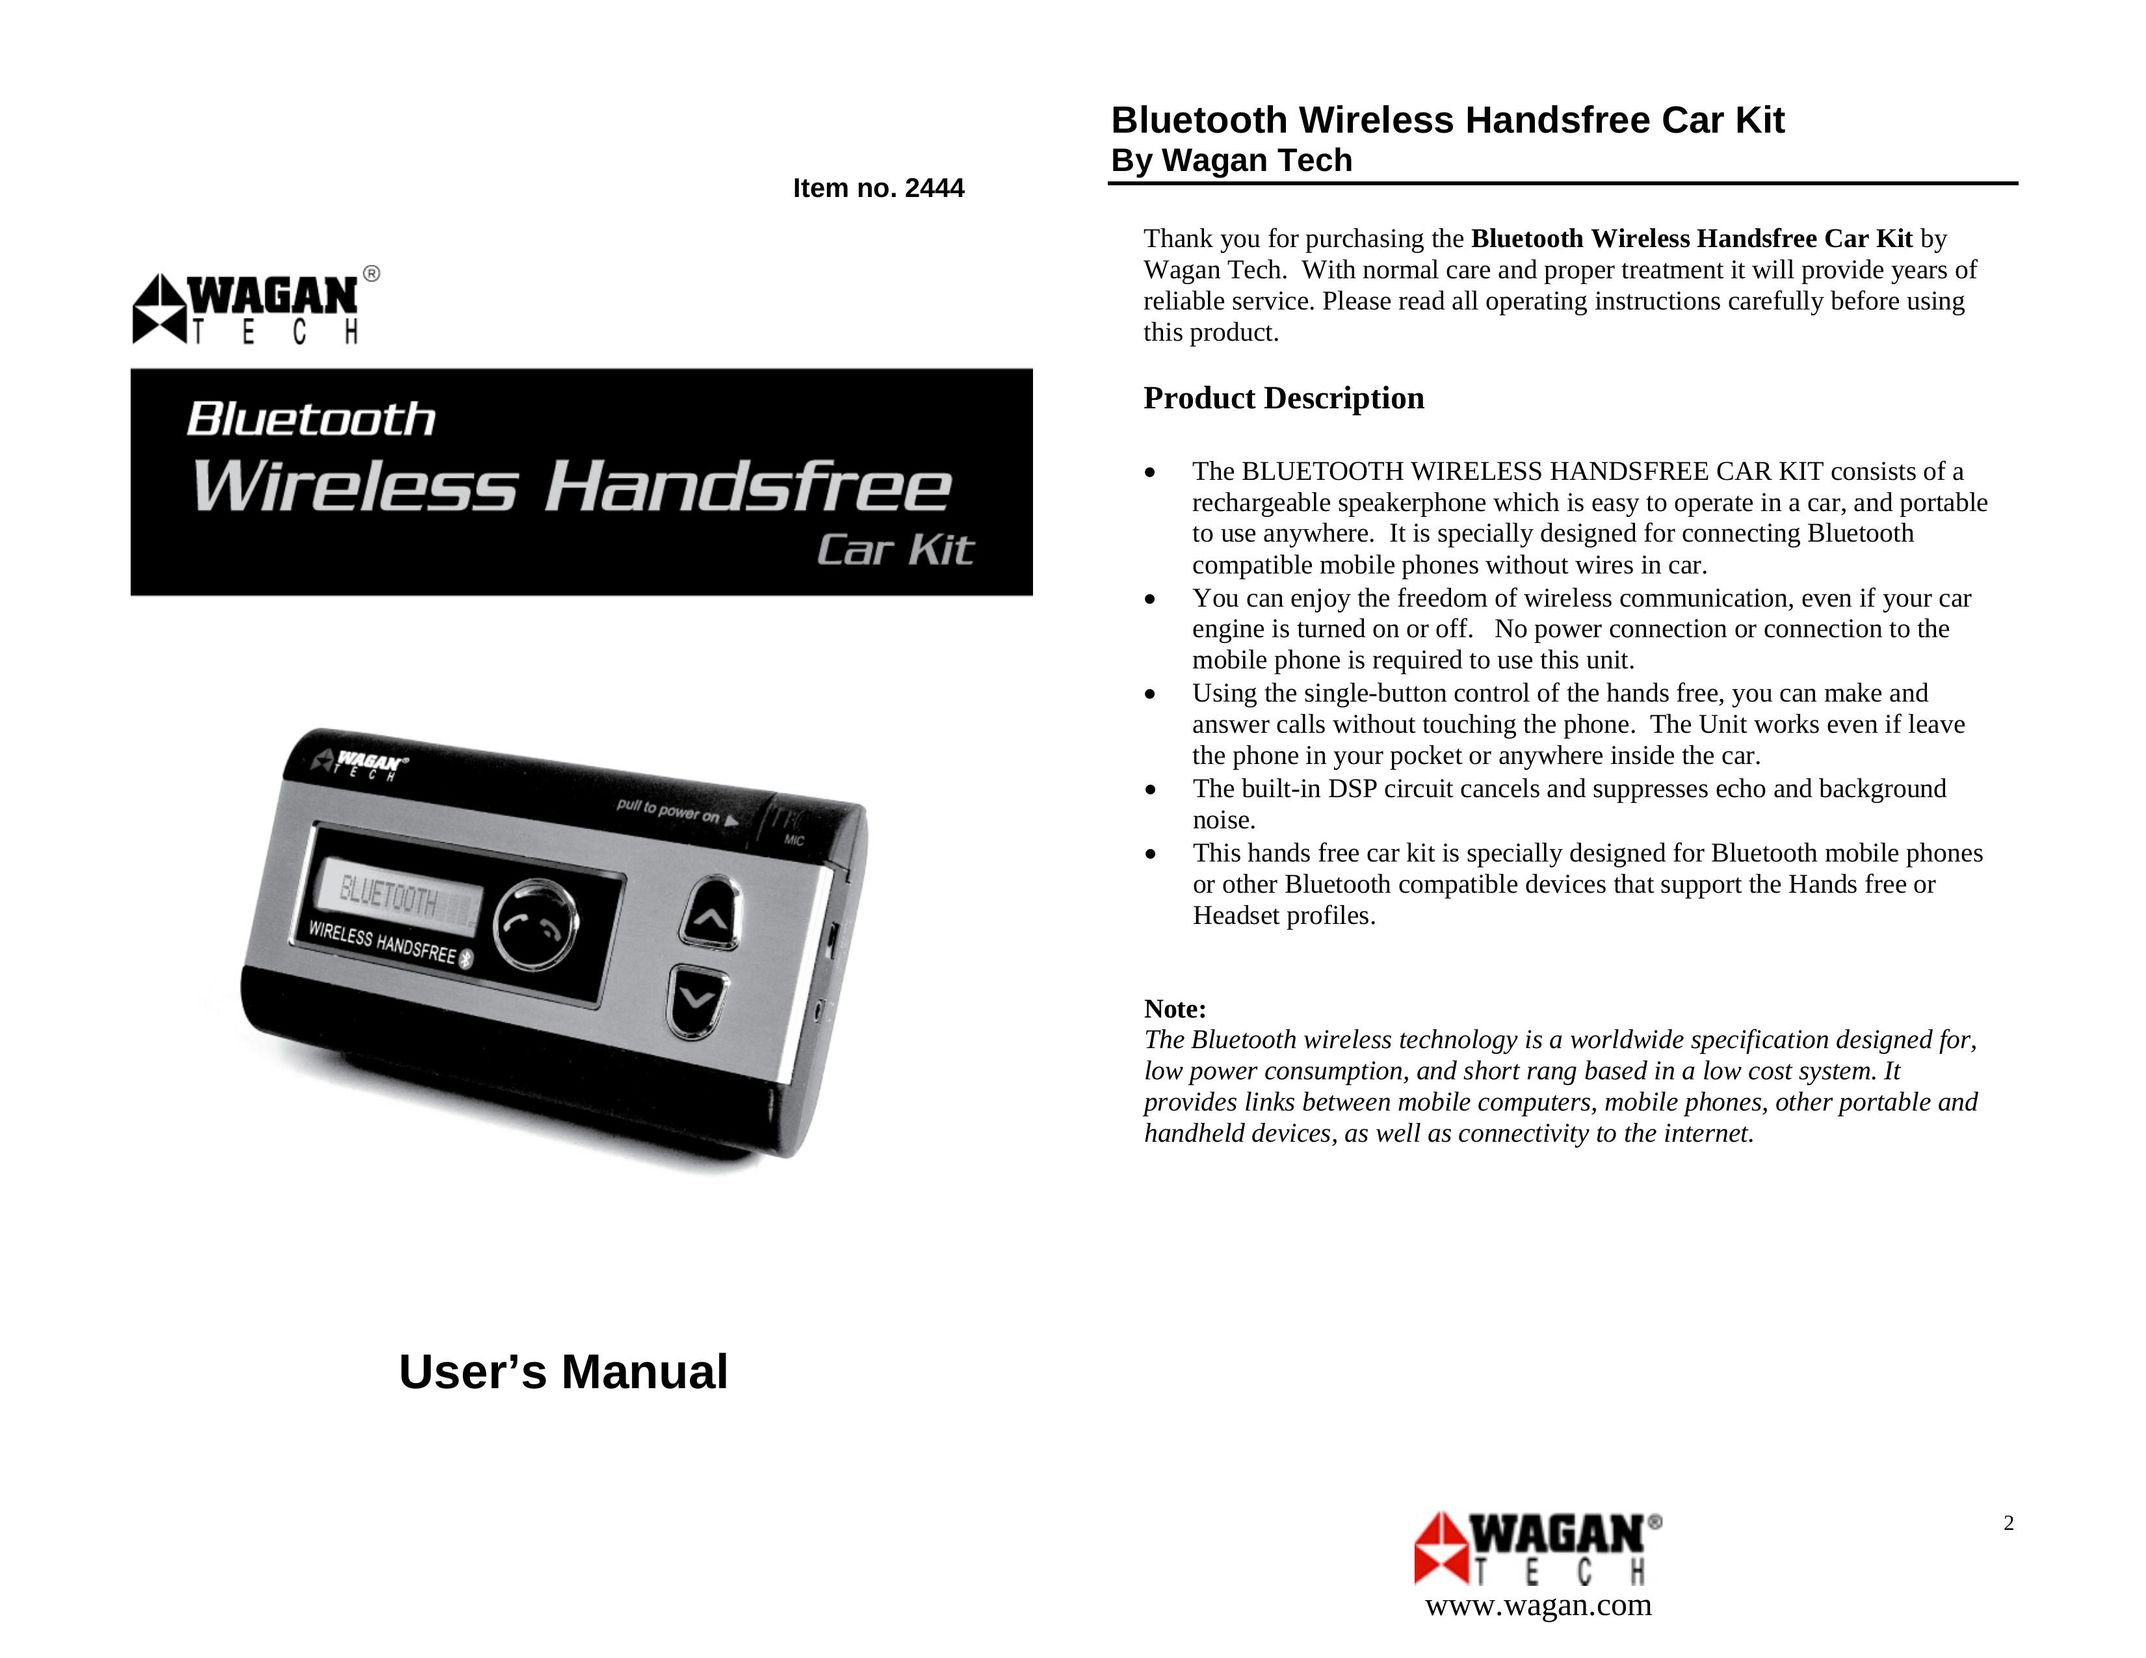 Wagan 2444 Bluetooth Headset User Manual